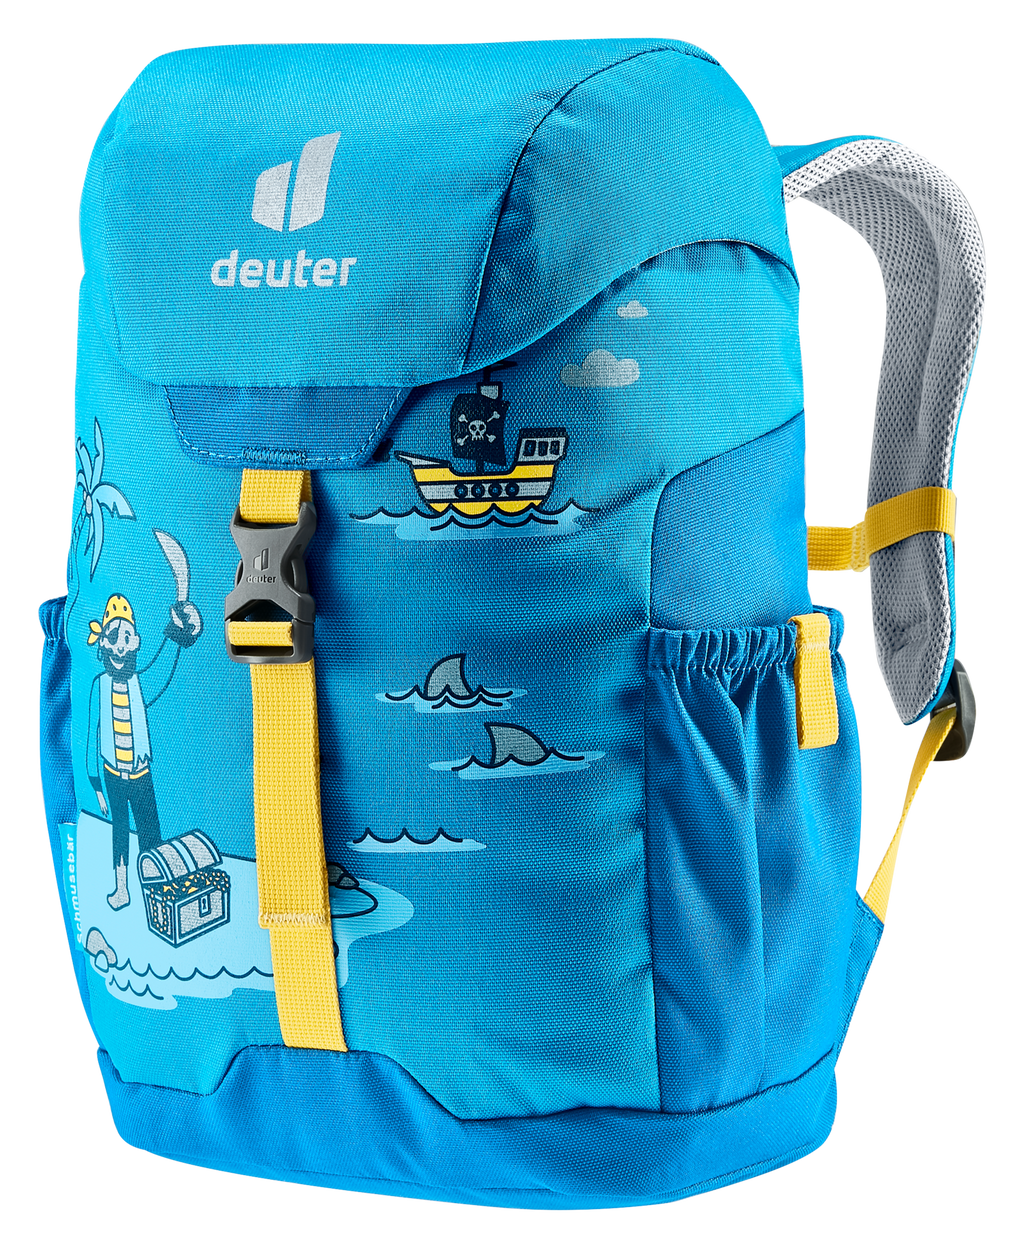 Deuter Backpack - Schmusebar - Azure/Lapis-Mountain Baby